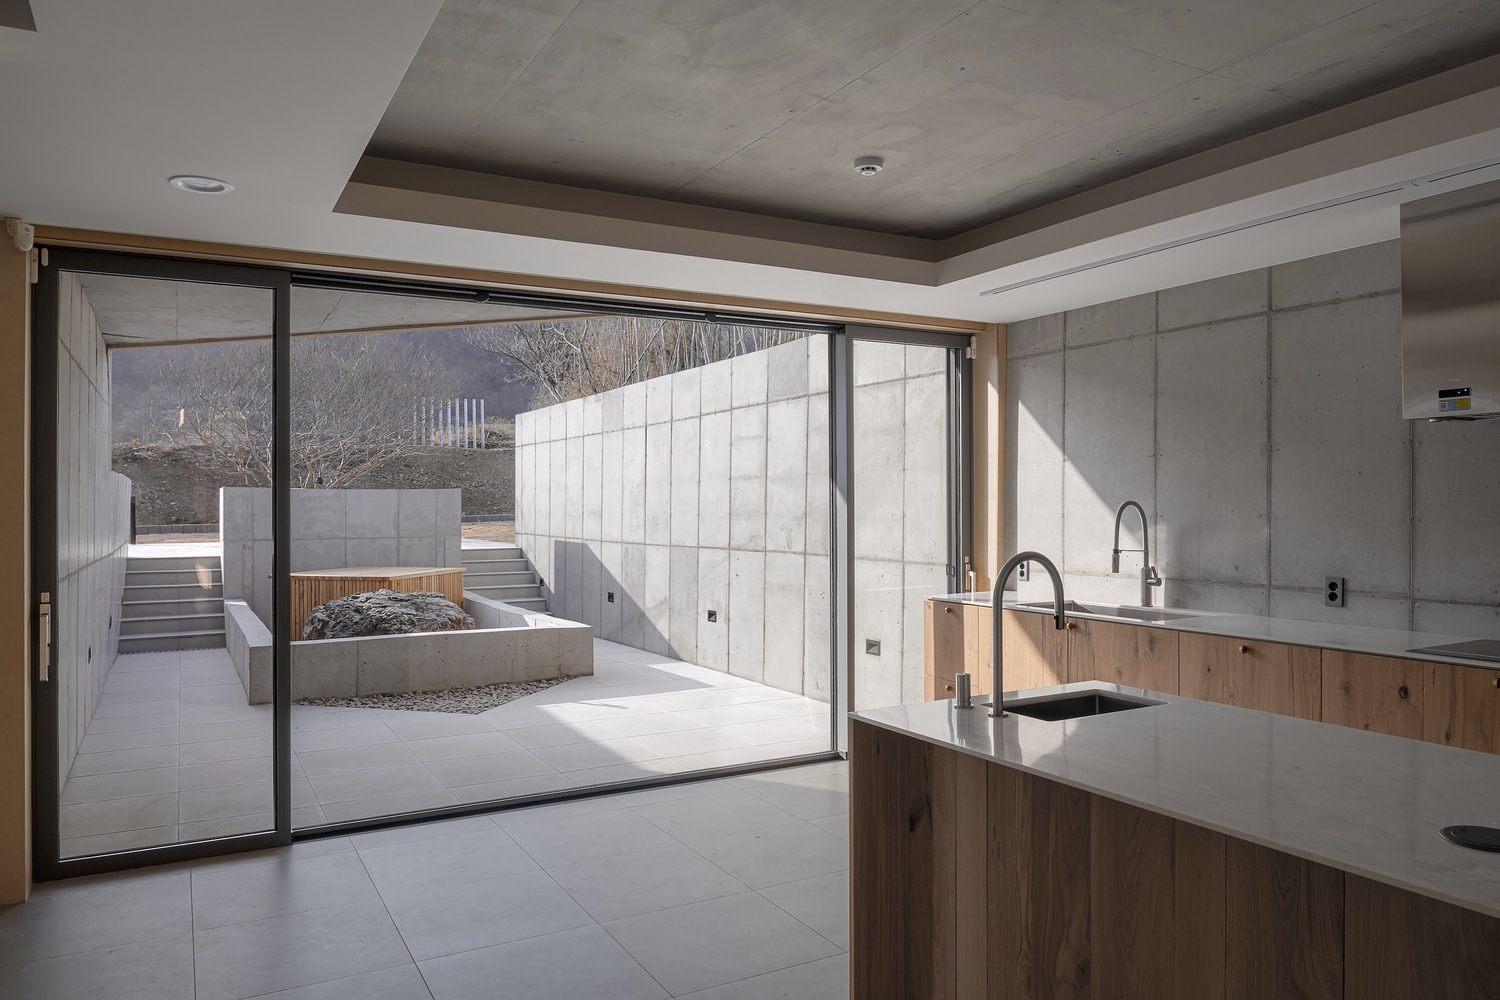 TURTLE Architects,韓國,住宅設計,200㎡,國外住宅設計案例,極簡風格,鄉村住宅,獨棟住宅